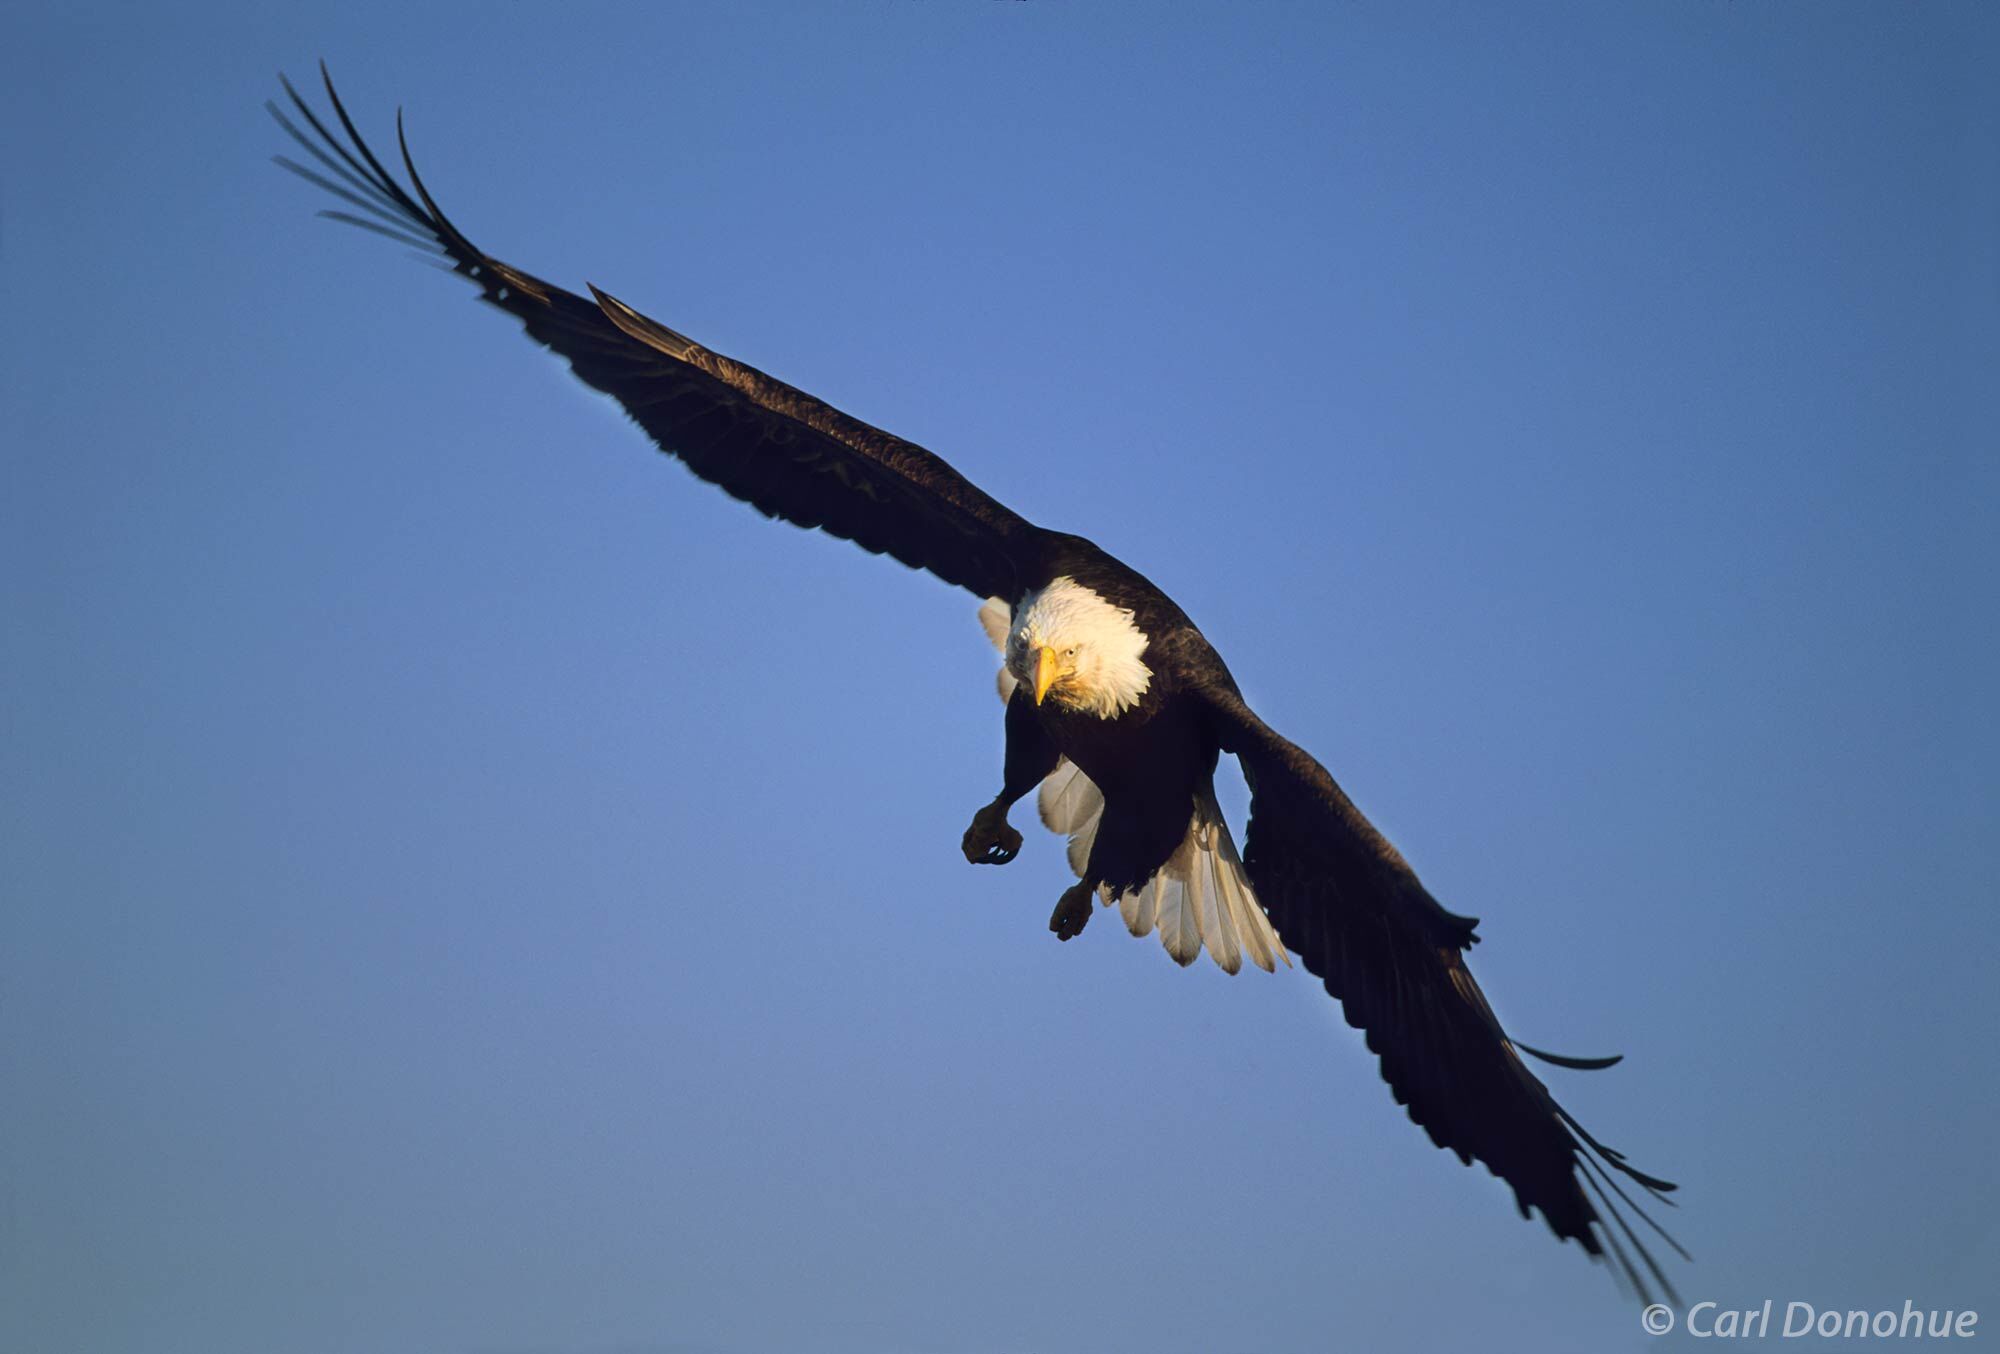 Wings spread wide, landing gear down, an adult Bald Eagle coming in for landing, Homer, Alaska. Haliaeetus leucocephalus.